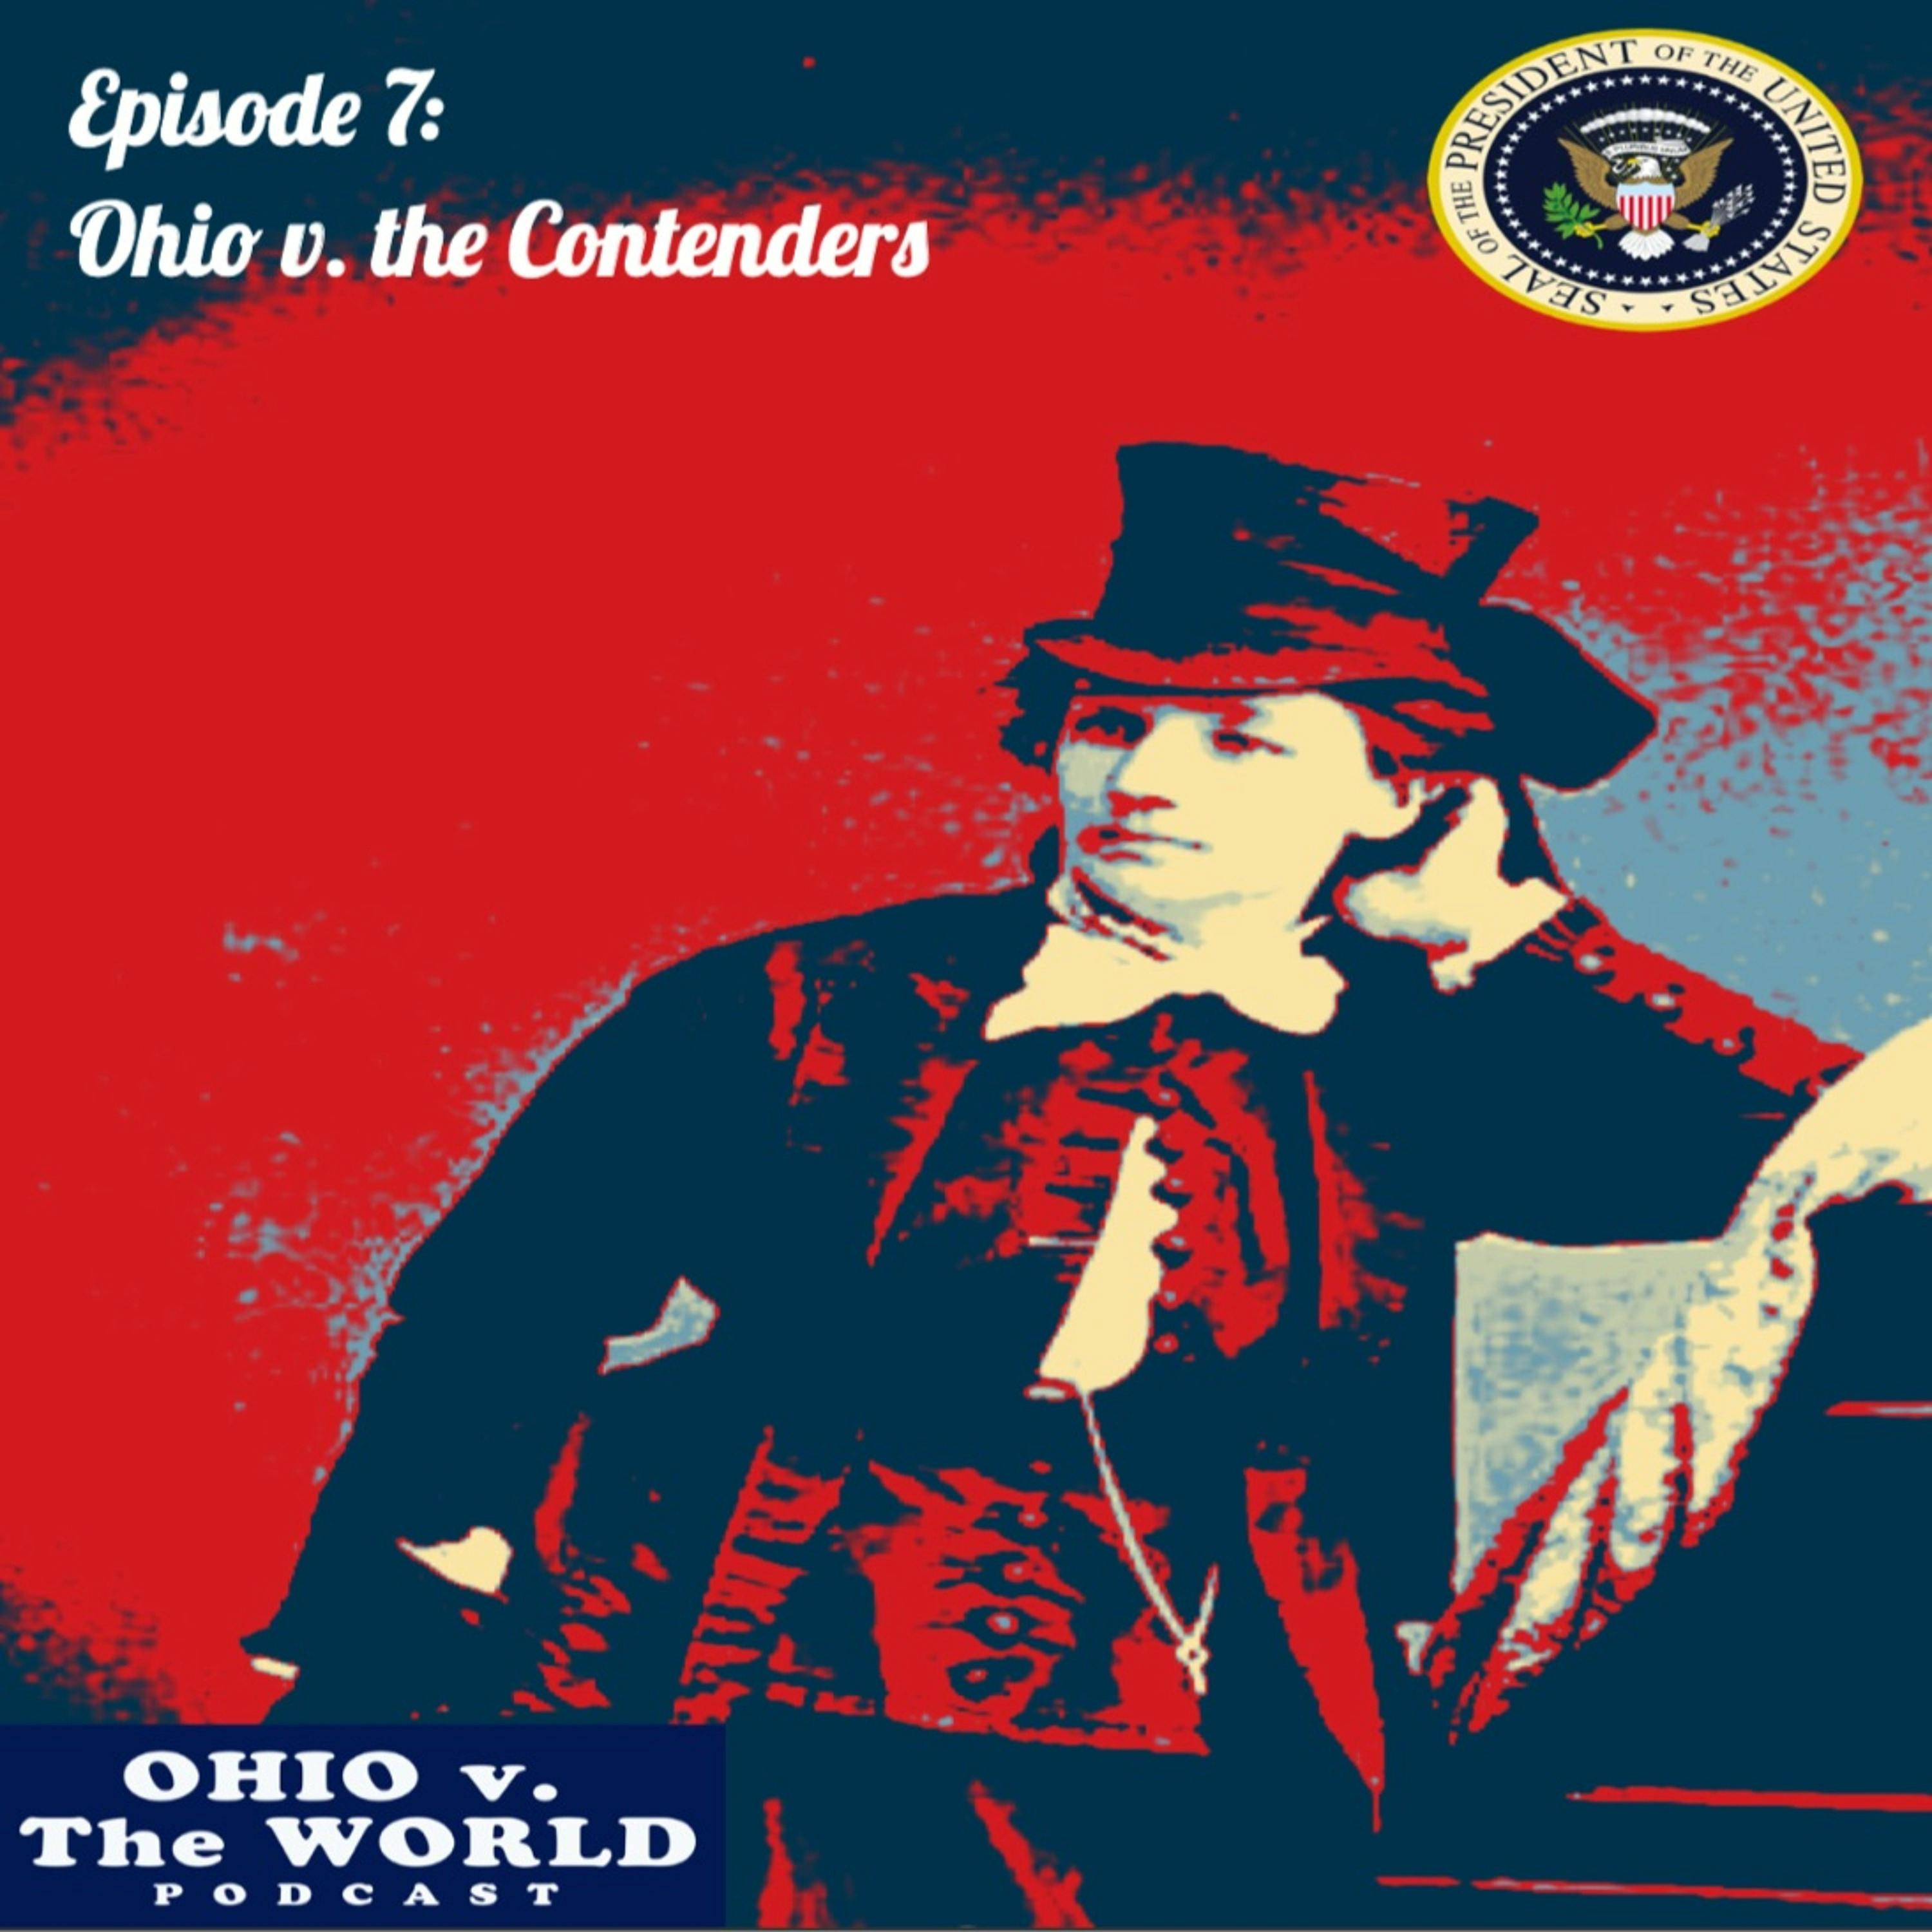 Episode 7: Ohio v. the Contenders